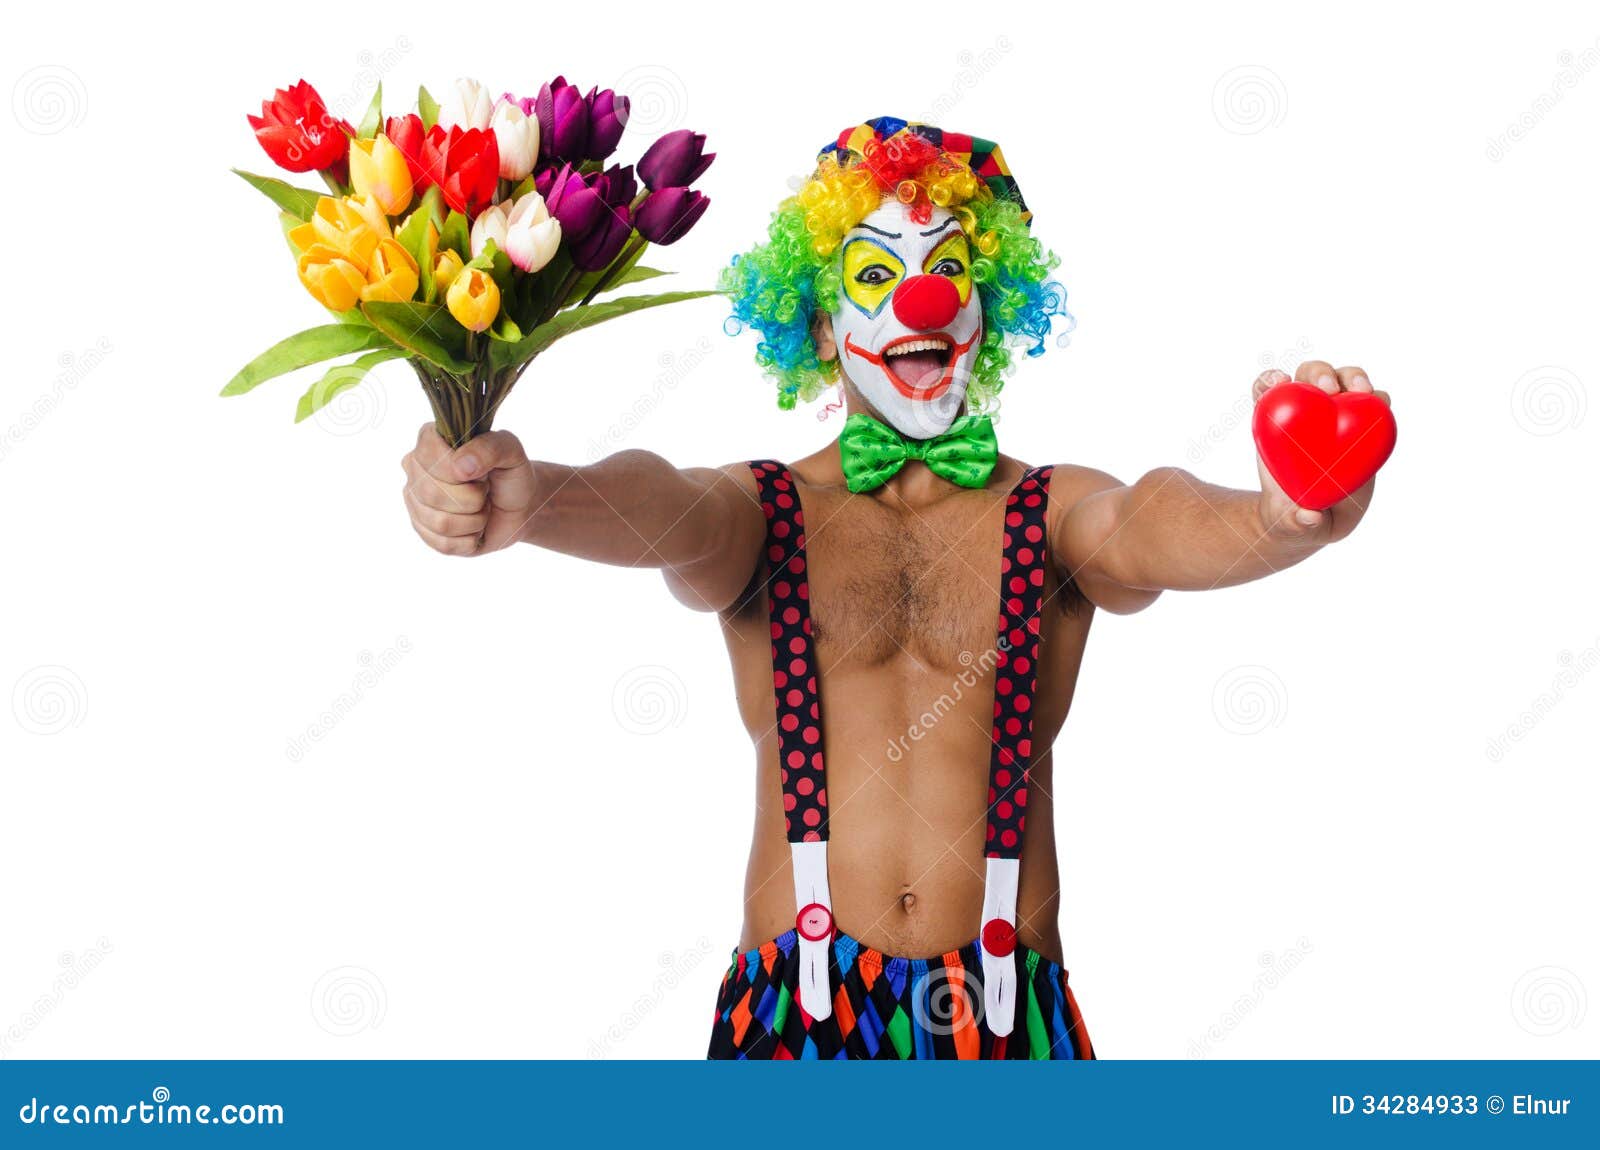 Клоун растение. Клоун с цветами. Клоун с цветочком. Клоун и цветы картинки. Клоунский фон с цветами.